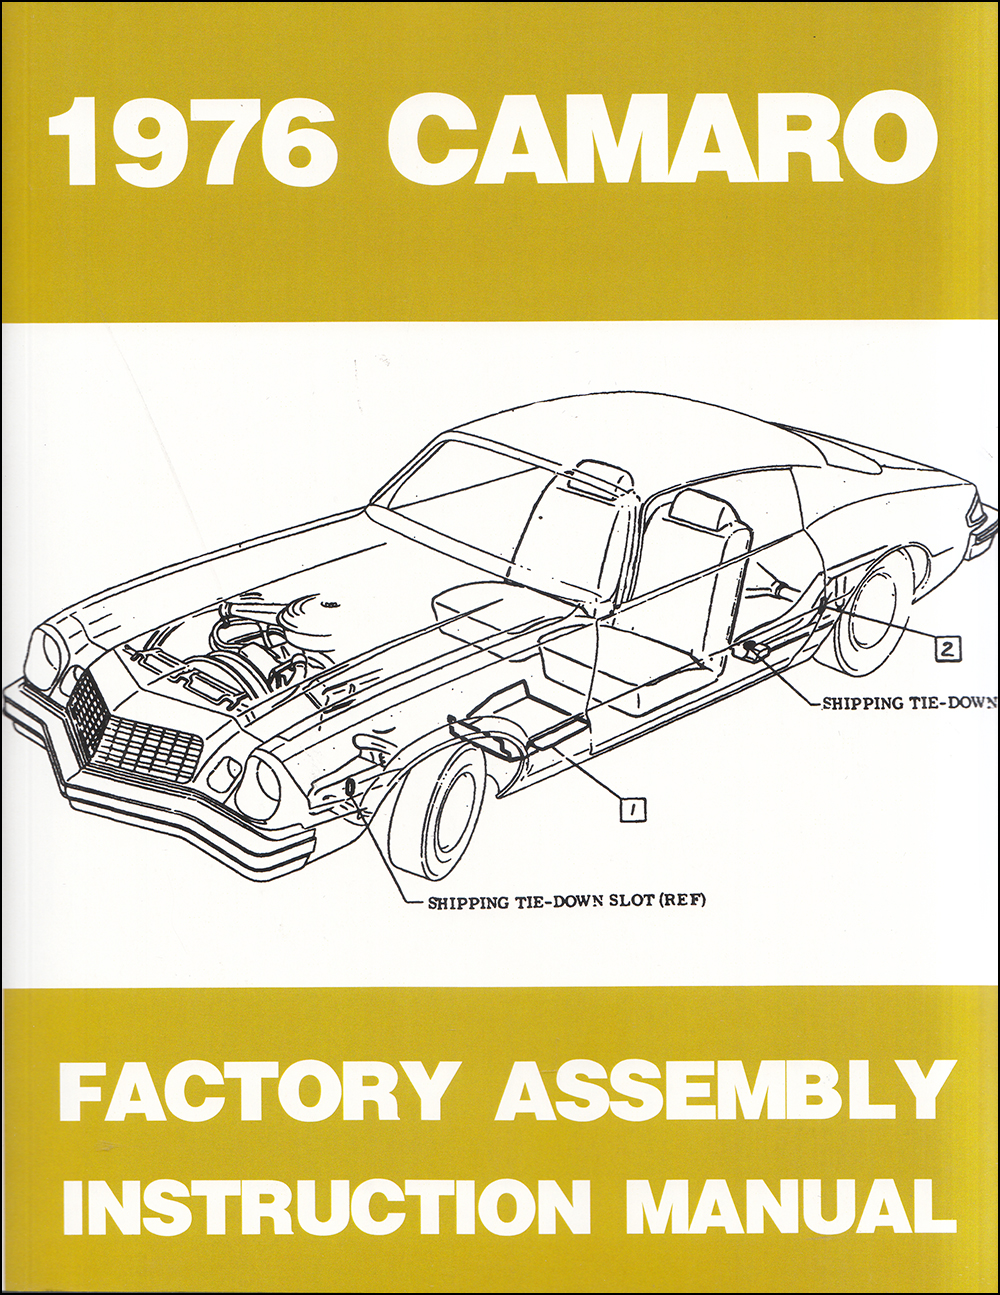 1976 Camaro Factory Assembly Manual Reprint Bound